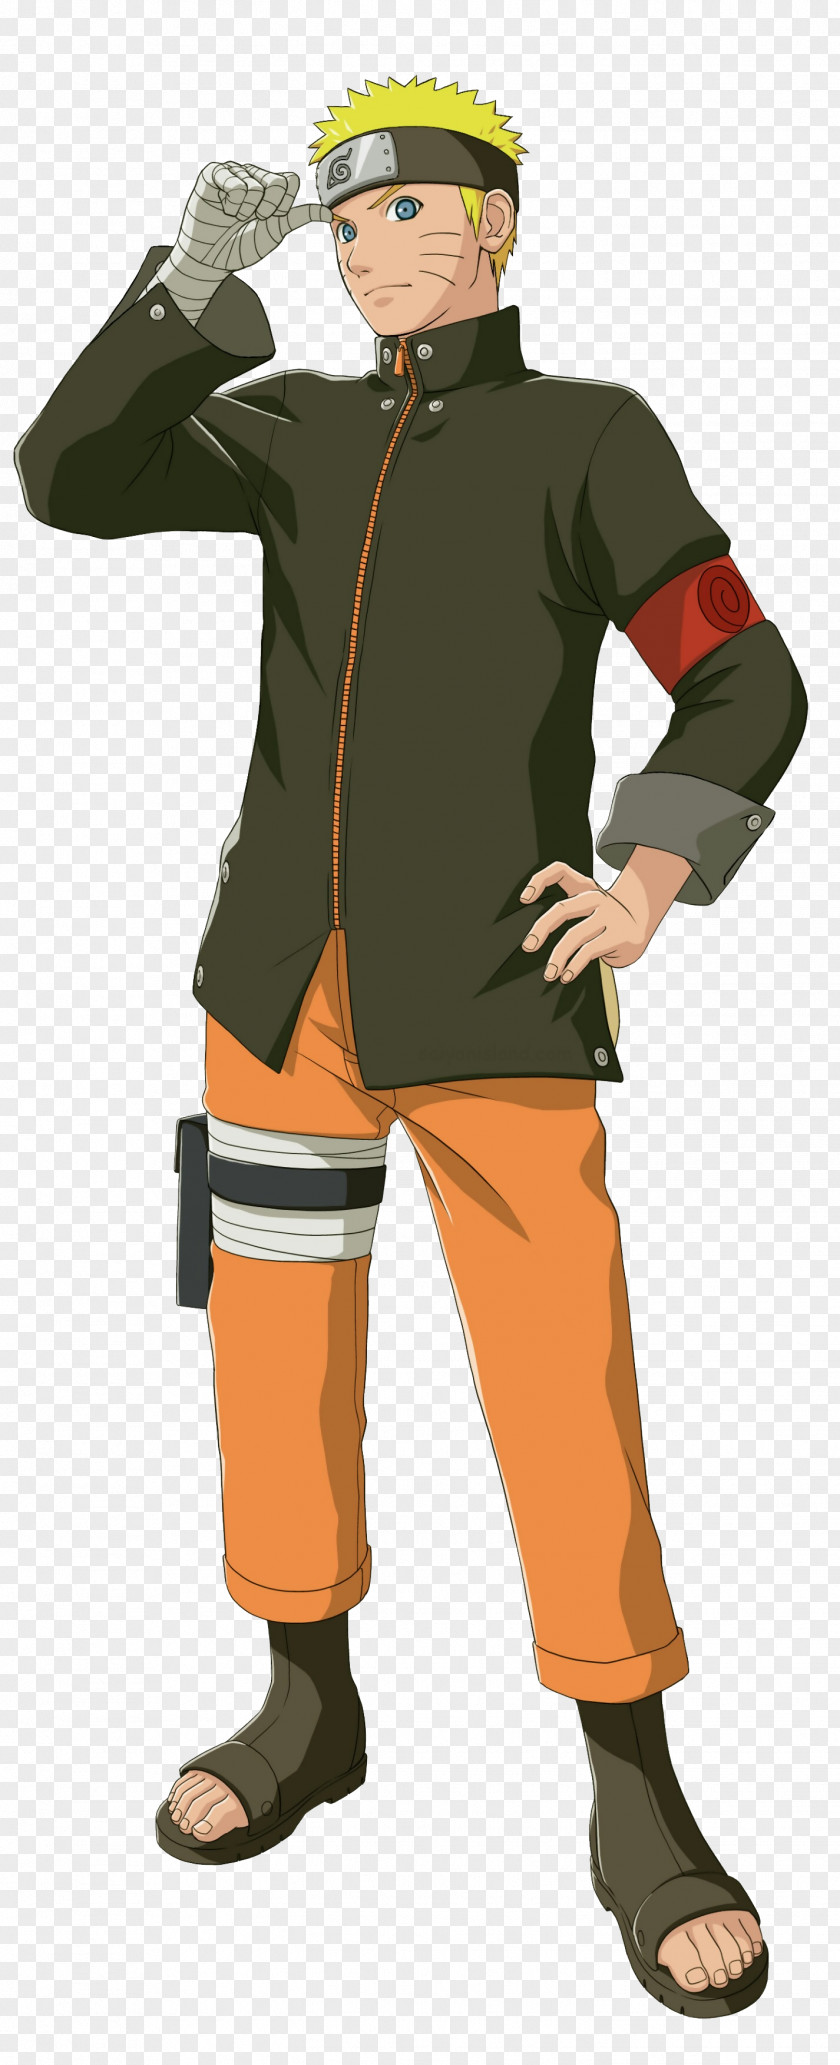 Naruto The Last Image Shippuden: Ultimate Ninja Storm 4 Sasuke Uchiha Uzumaki Sakura Haruno Gaara PNG